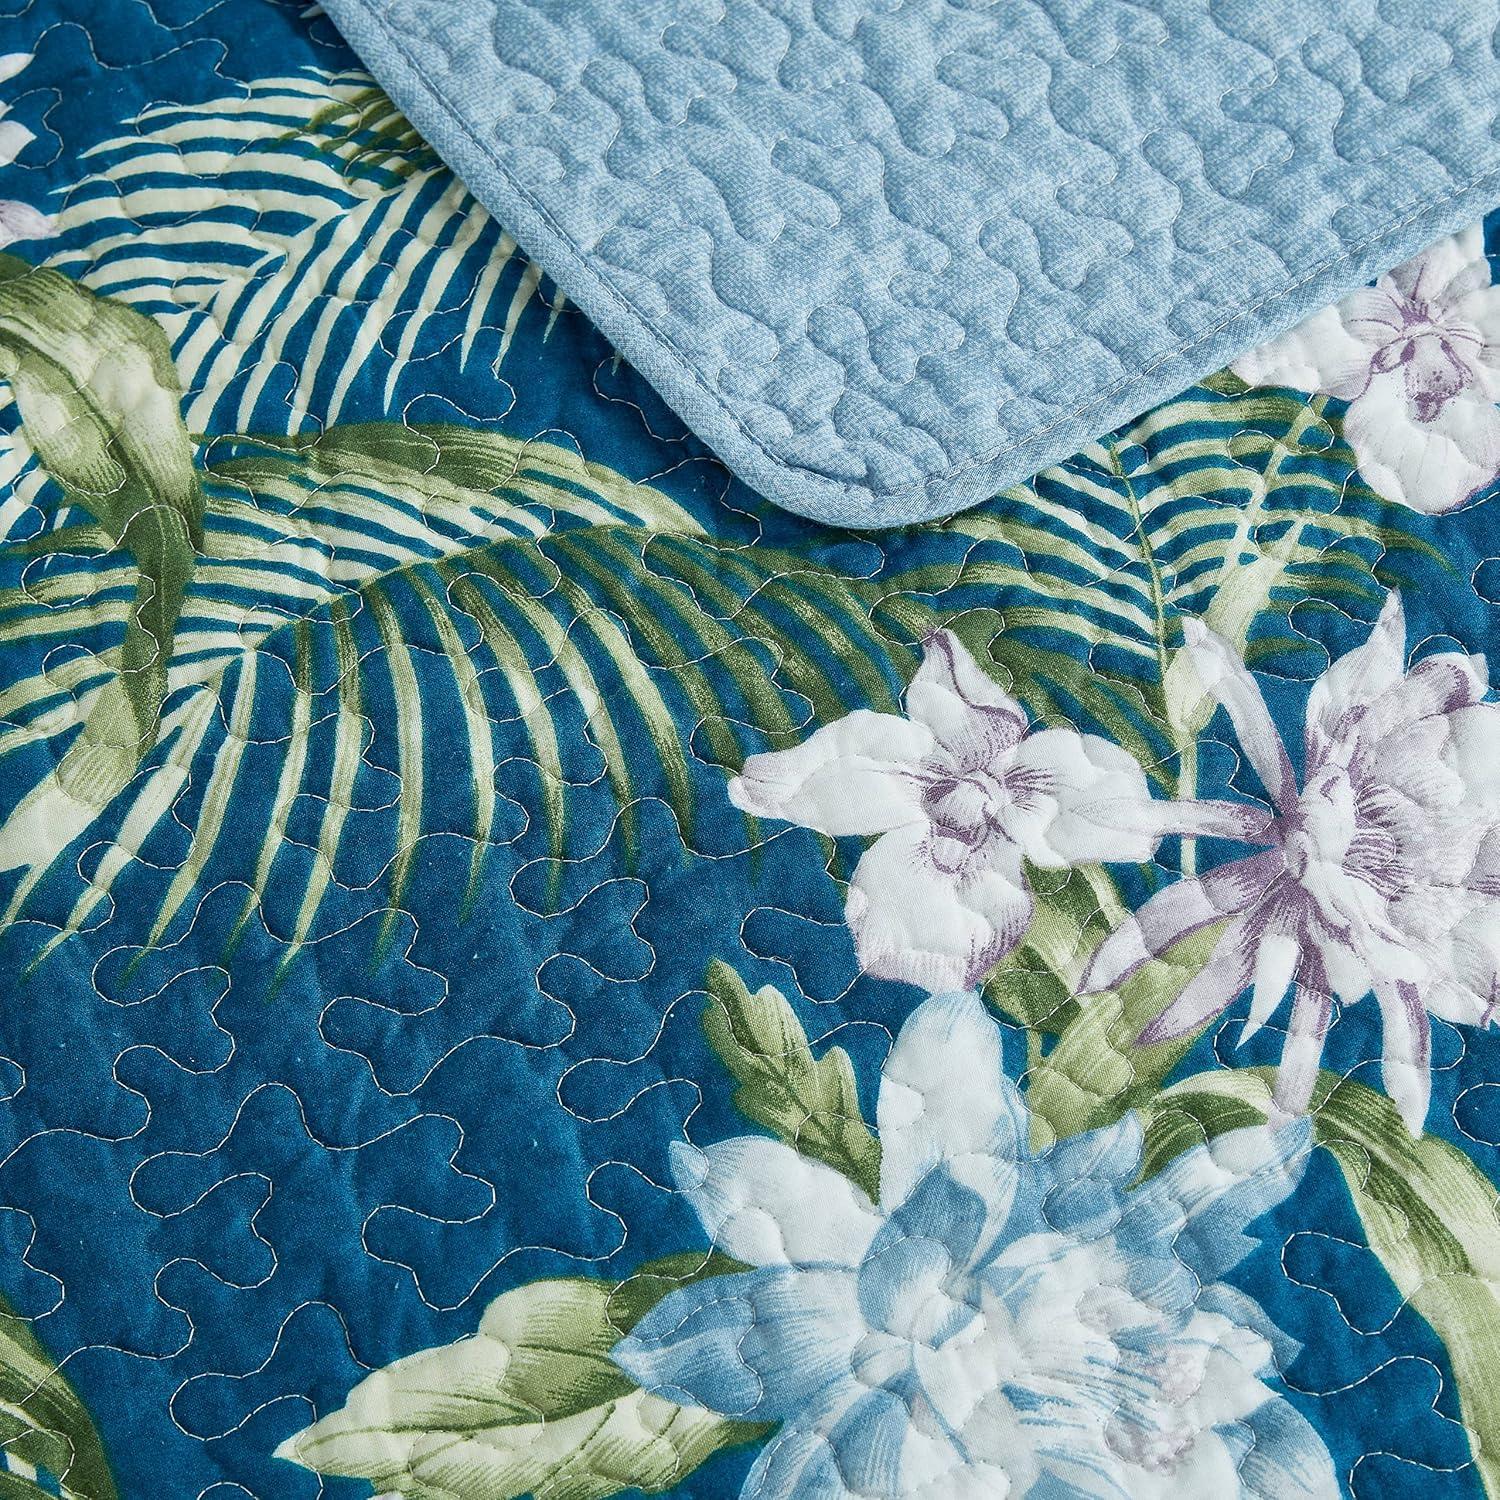 Coastal Breeze Full/Queen Blue Cotton Reversible Quilt Set